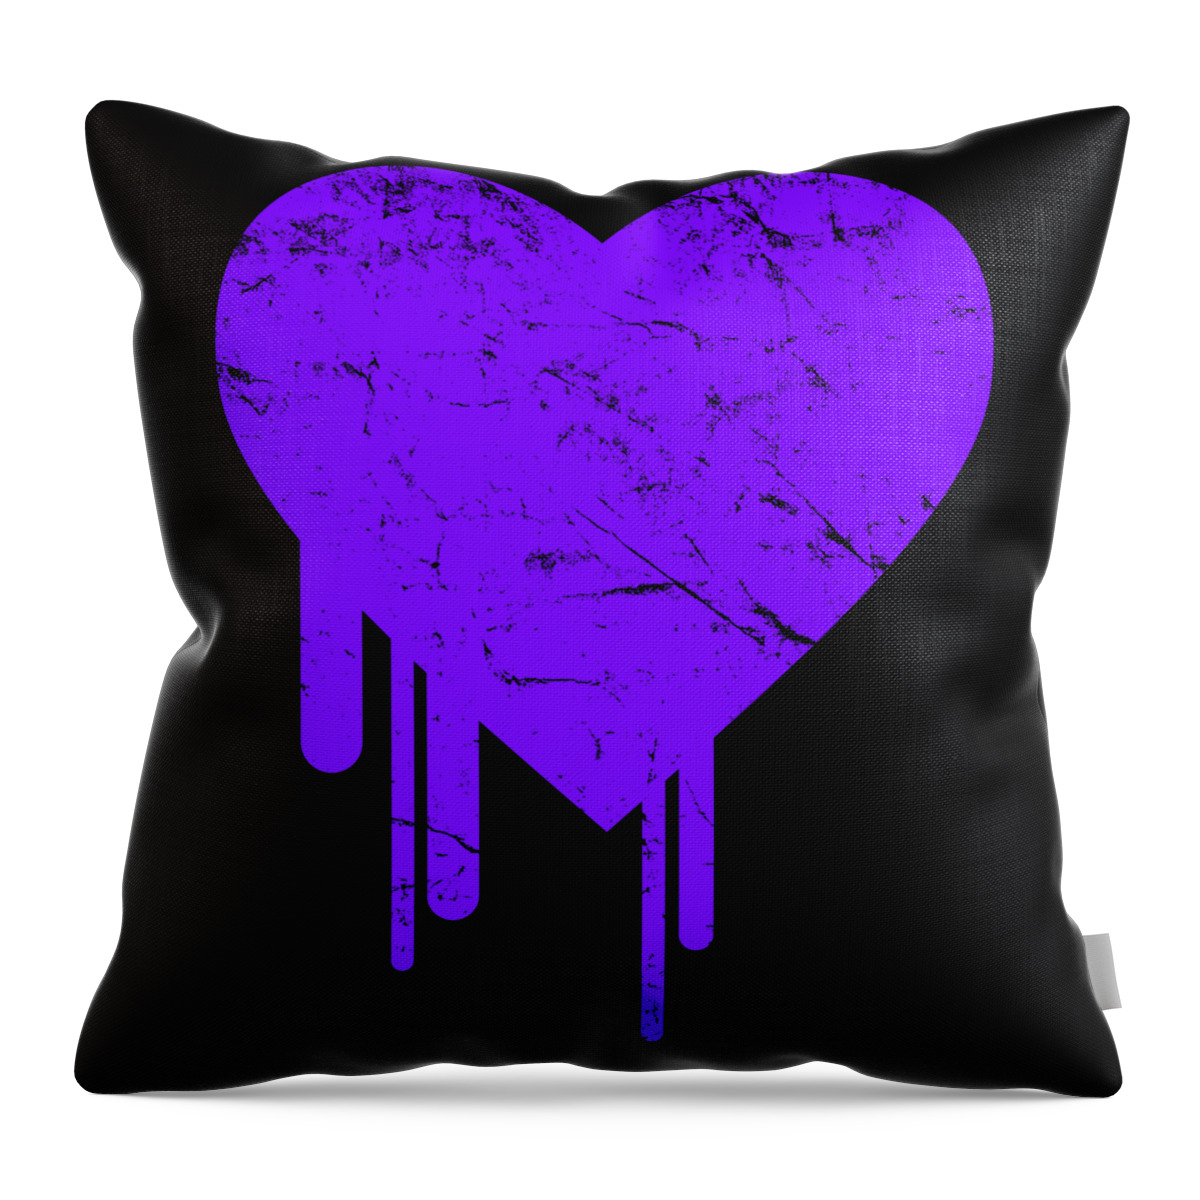 Funny Throw Pillow featuring the digital art Bleeding Purple Heart by Flippin Sweet Gear